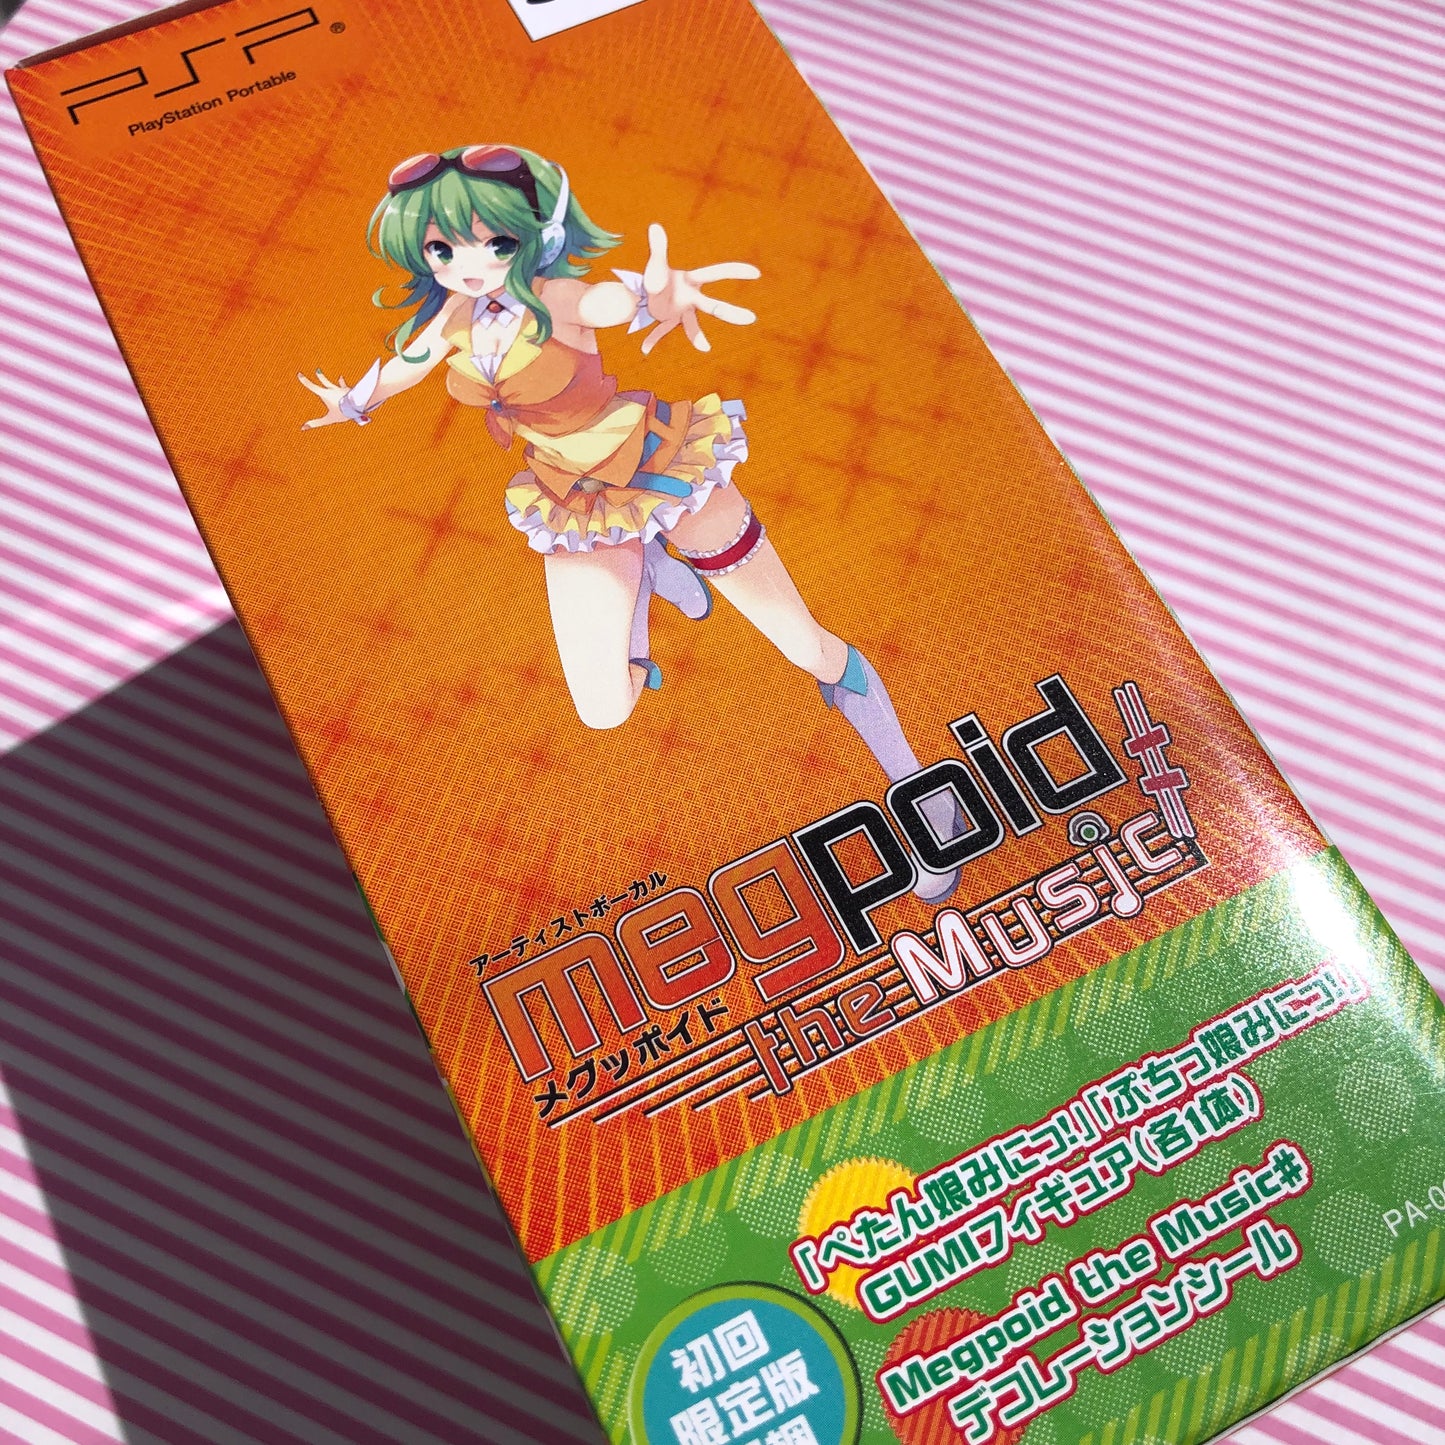 Vocaloid - Megpoid Gumi - The Music - Edicion Limitada PSP (Videojuego + 2 Figuras + Pegatina PSP) JAP